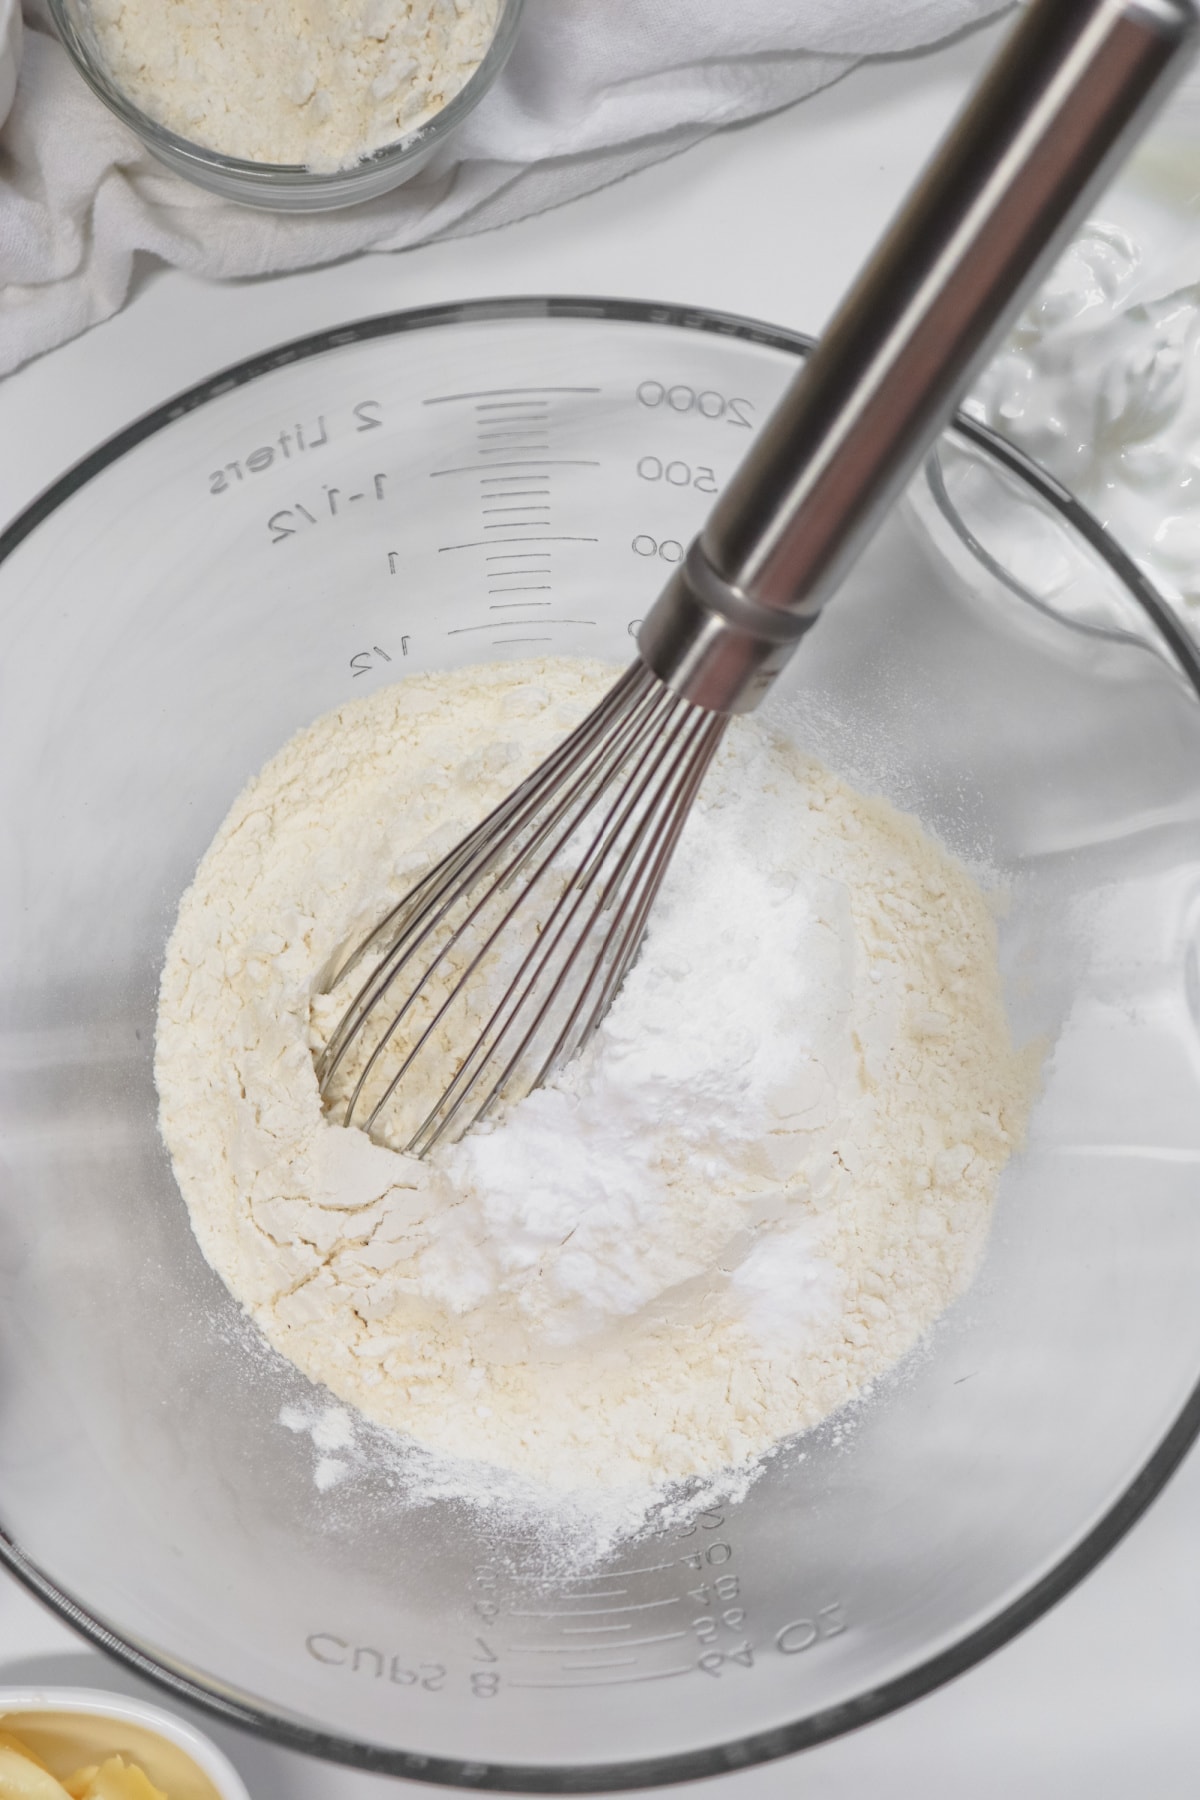 Whisking flour, baking powder and baking soda